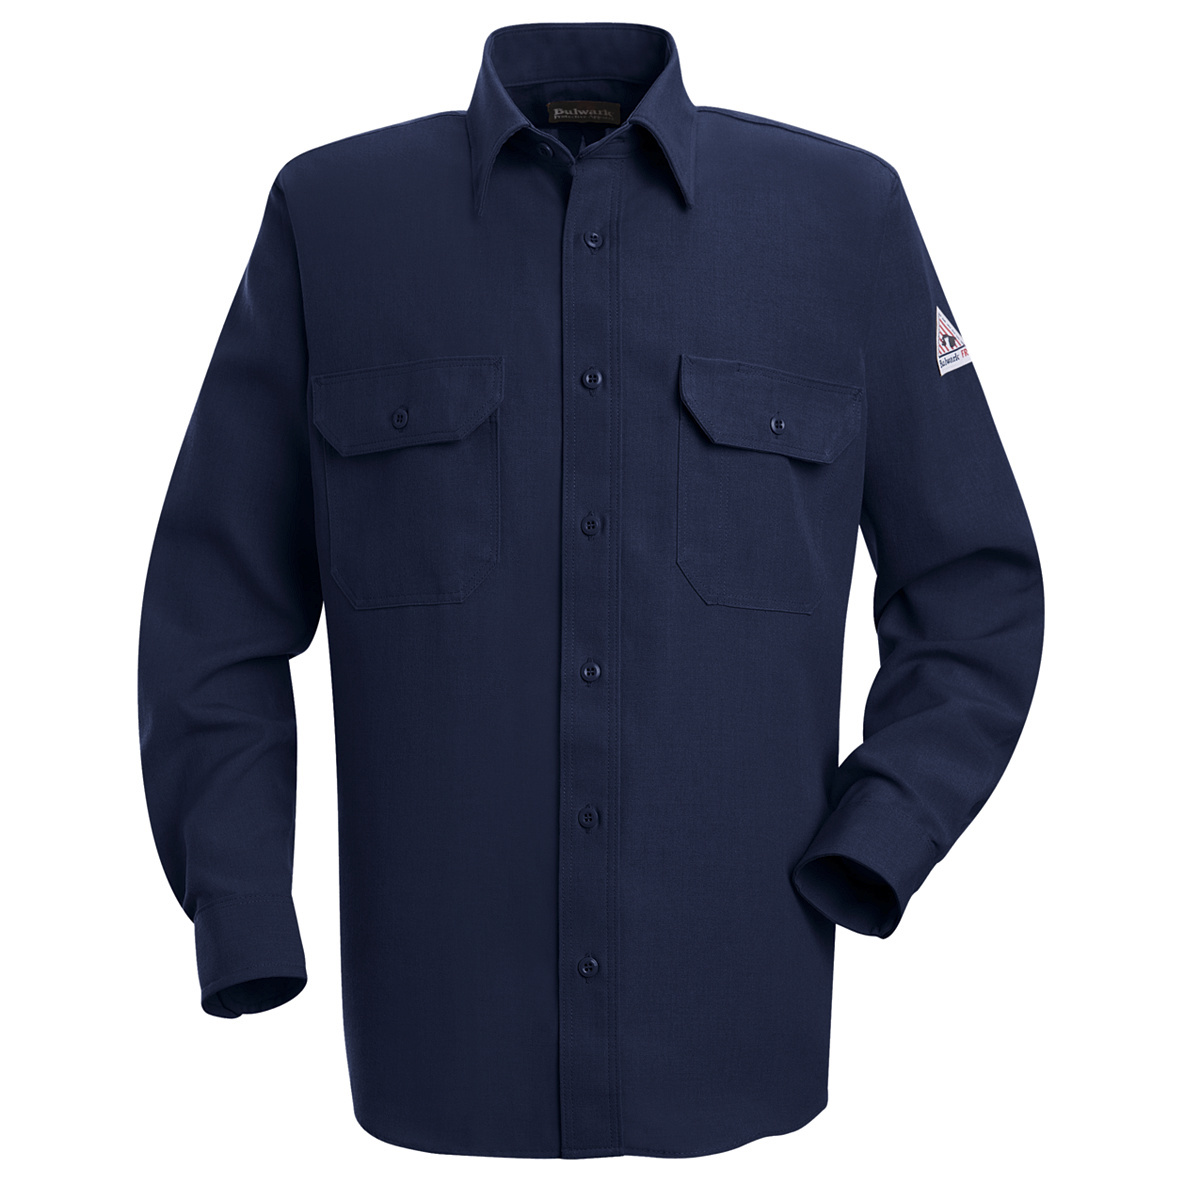 Bulwark® 3X Tall Navy Blue Nomex® IIIA/Nomex® Aramid/Kevlar® Aramid Flame Resistant Uniform Shirt With Button Front Closure